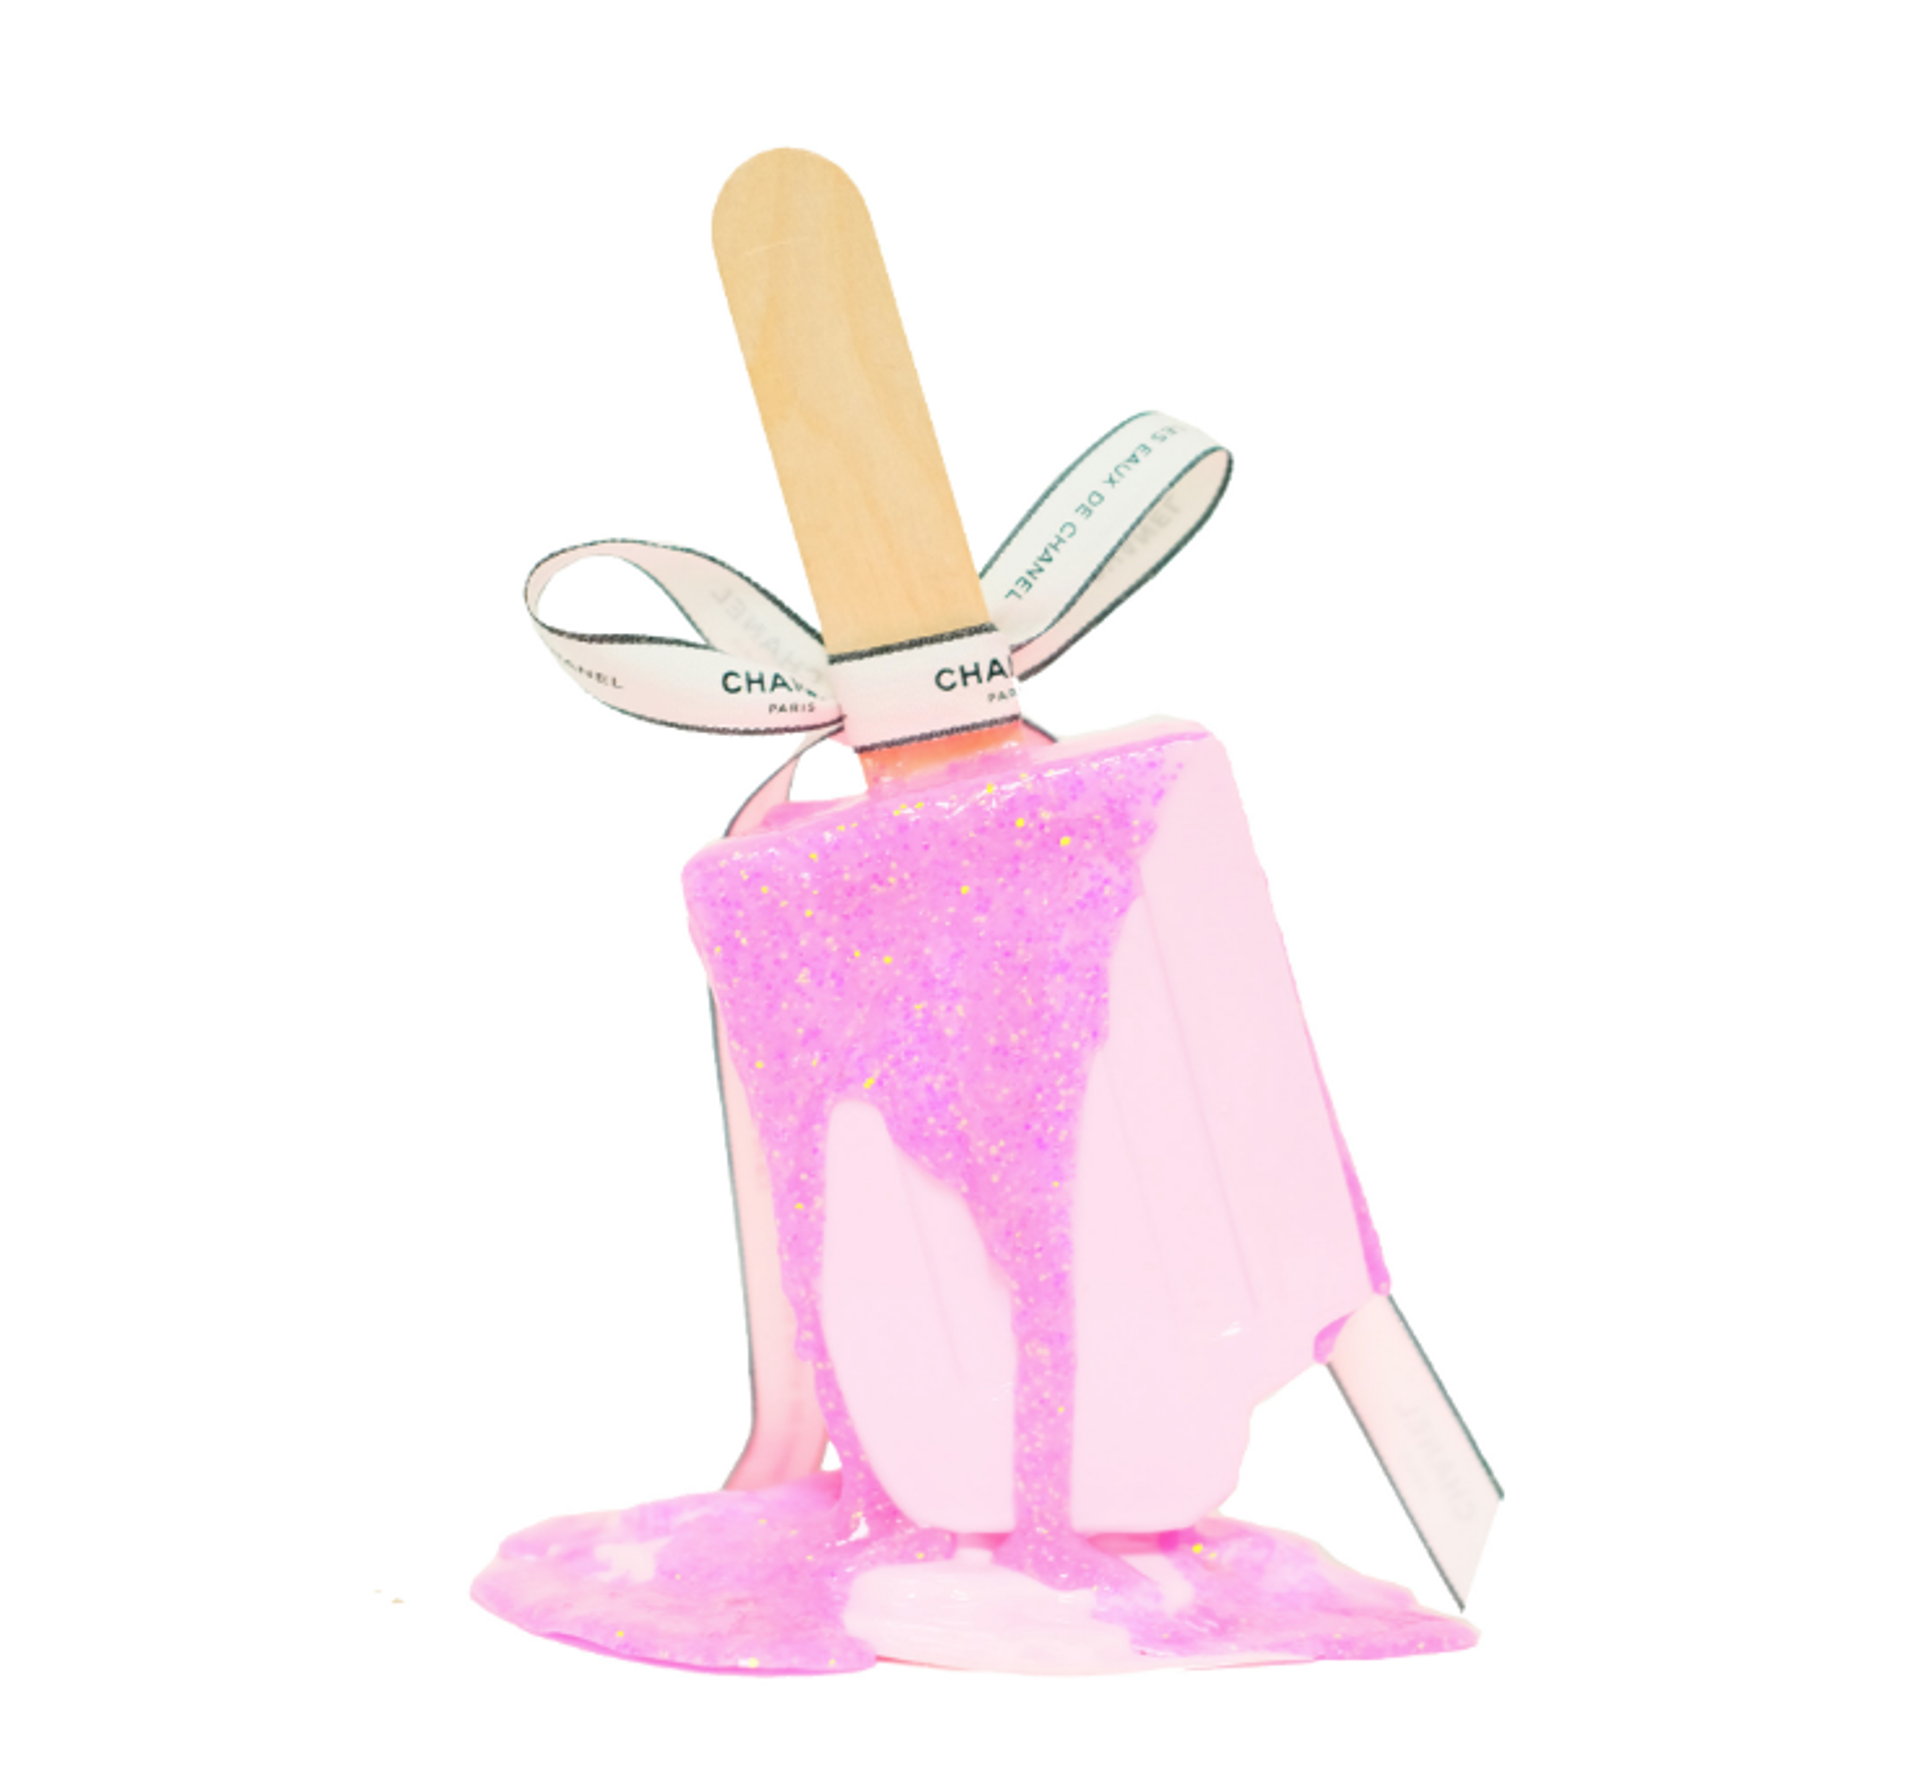 Melting Popsicle Art - Pantone 182c "Pink Chanel" by Betsy Enzensberger